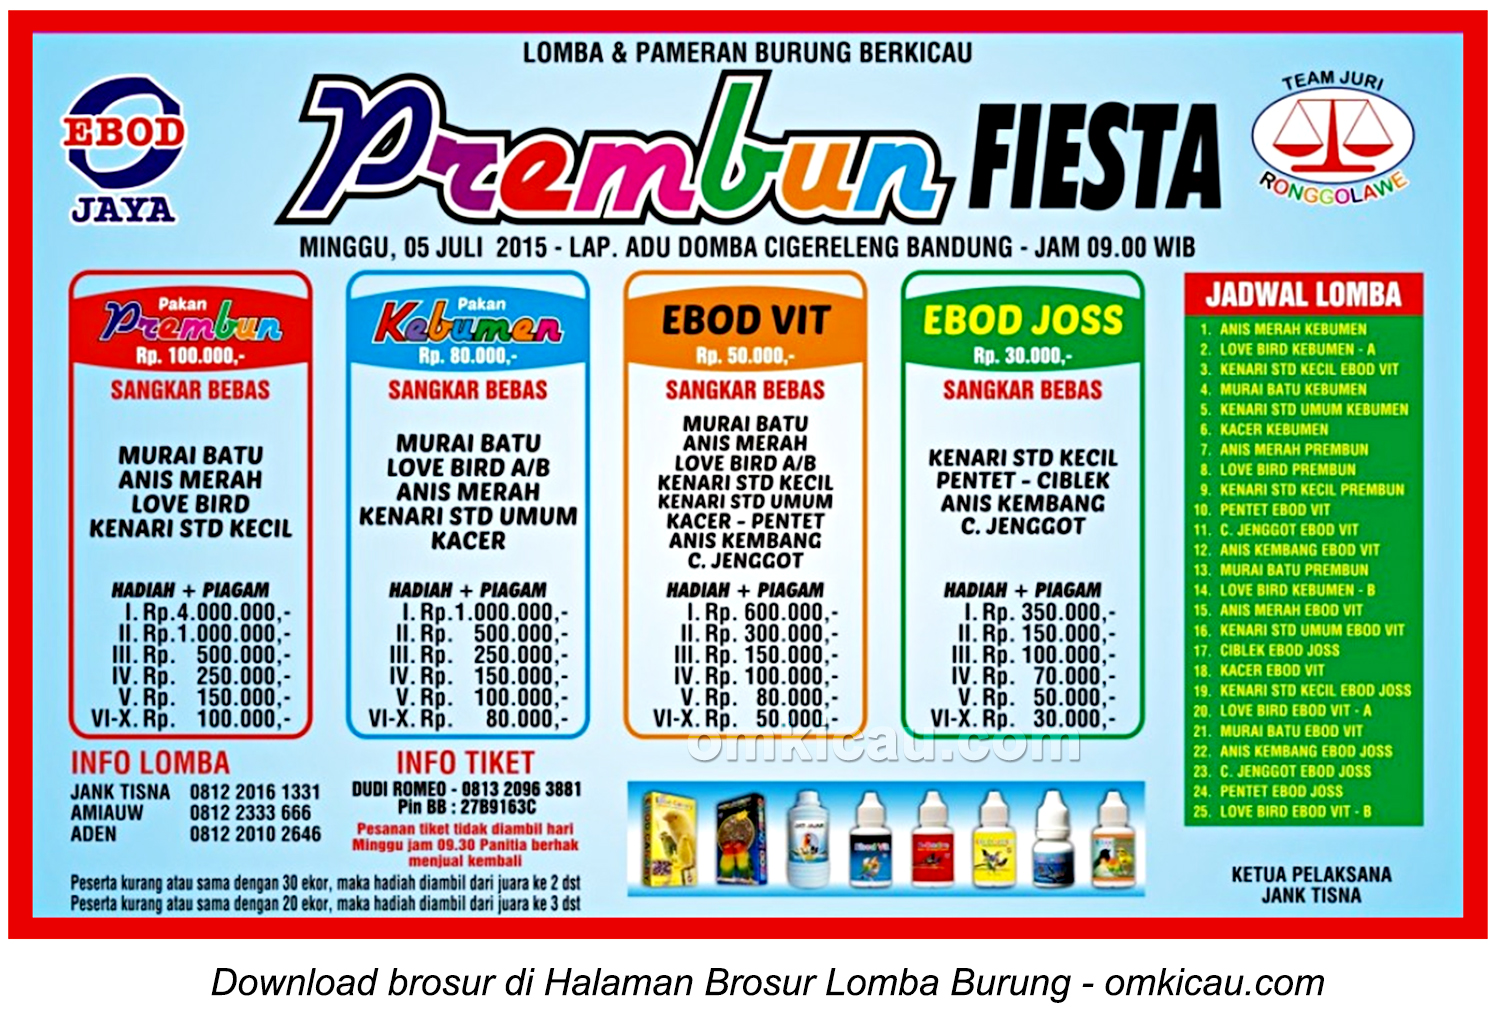 Brosur Lomba Burung Berkicau Prembun Fiesta, Bandung, 5 Juli 2015